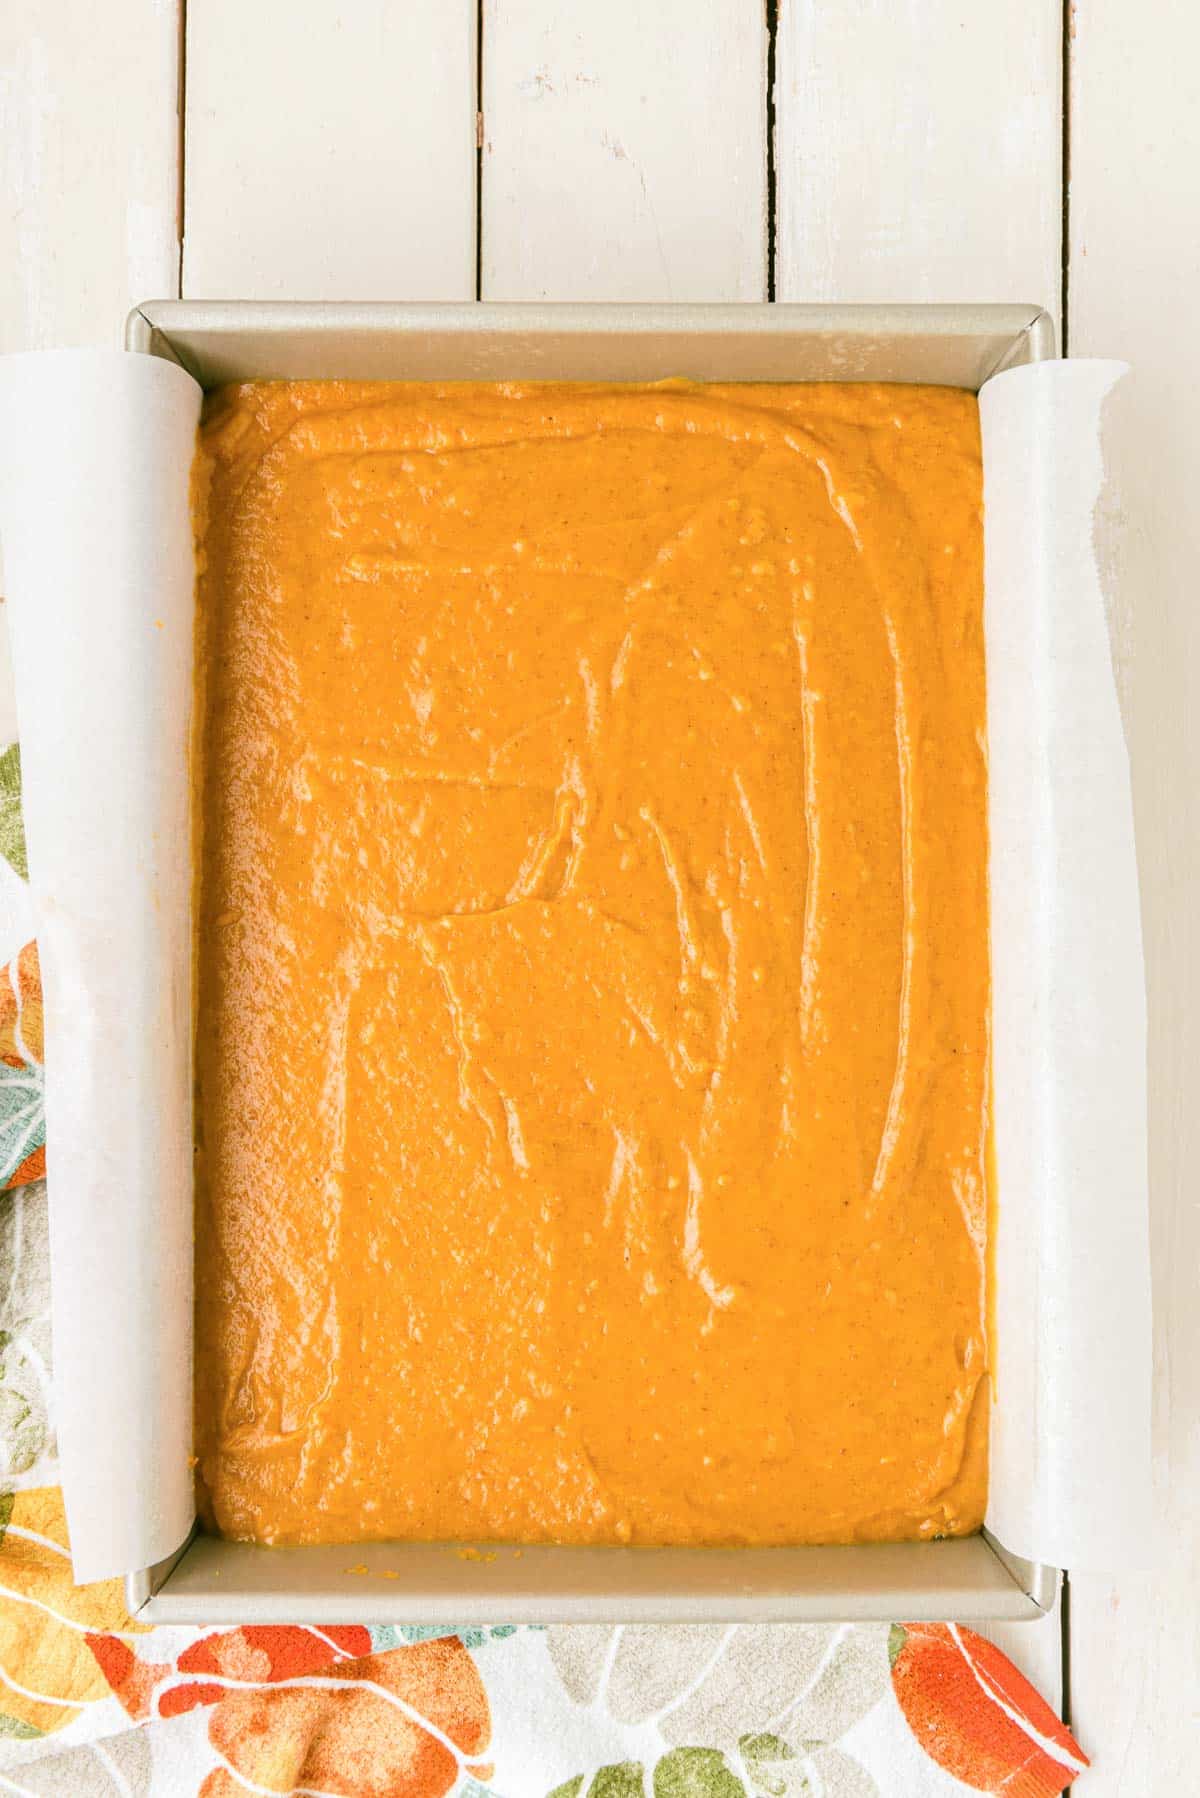 Pumpkin cake batter in a pan ready to bake.